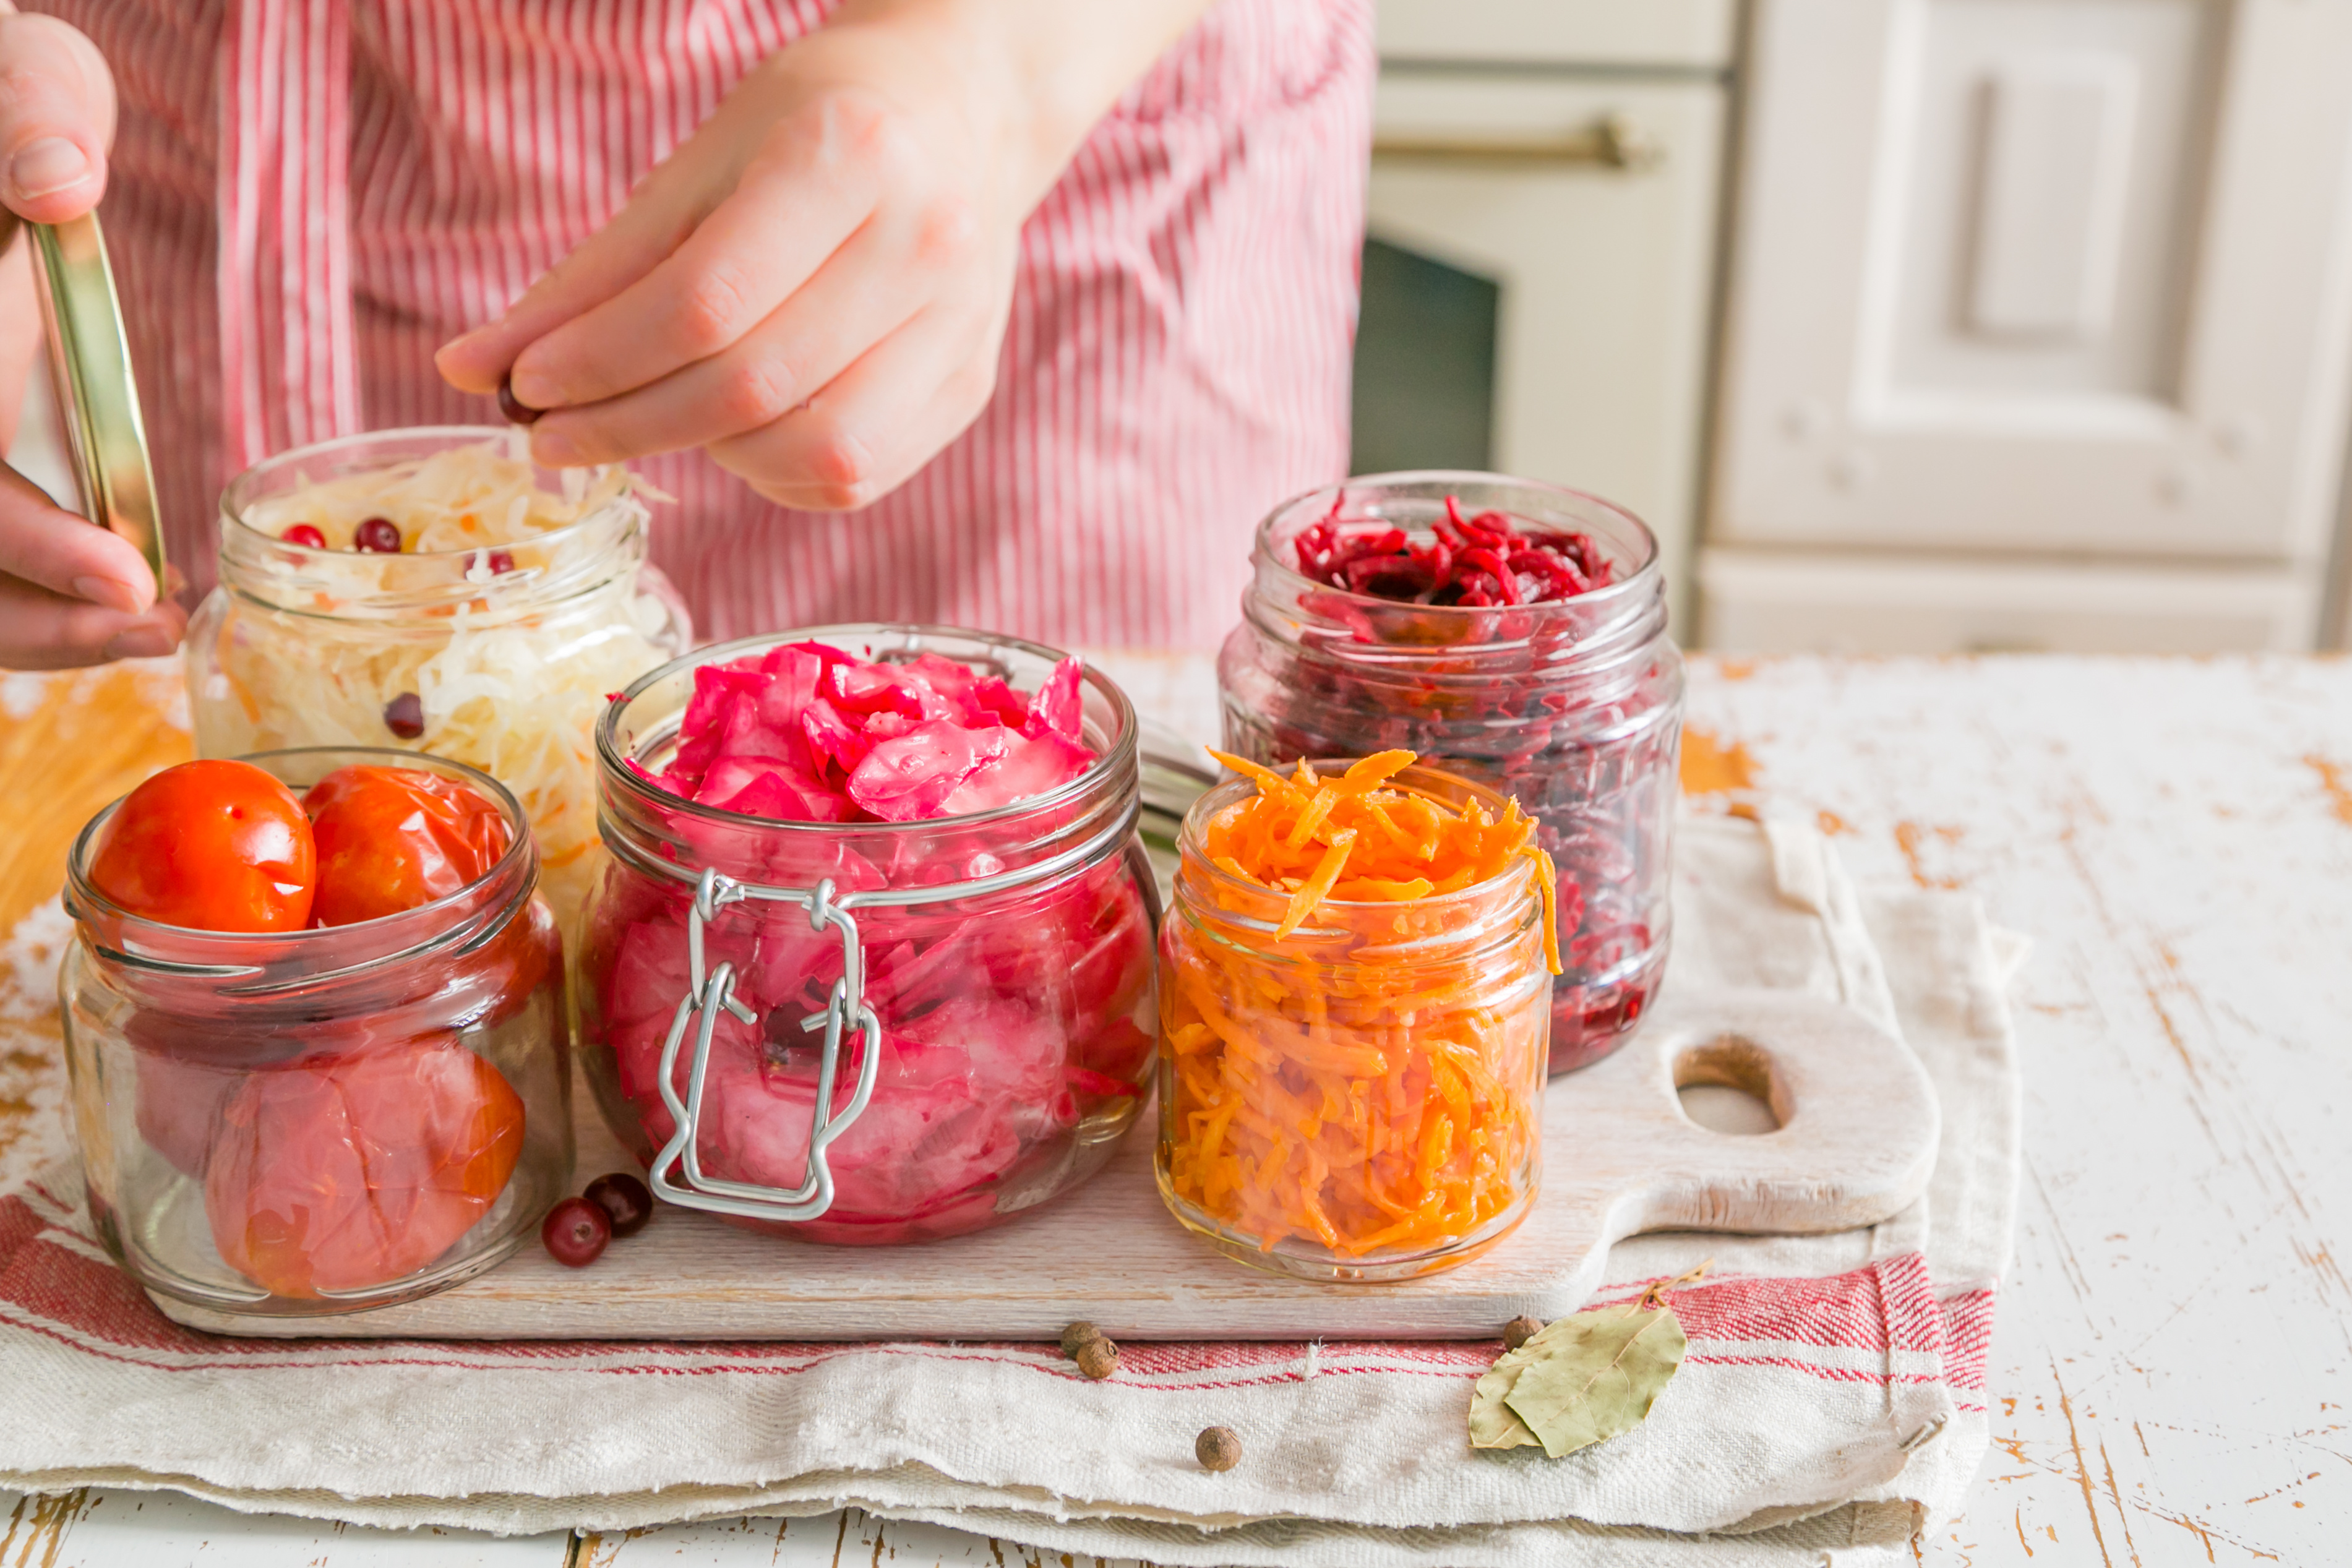 jars of different probiotic foods